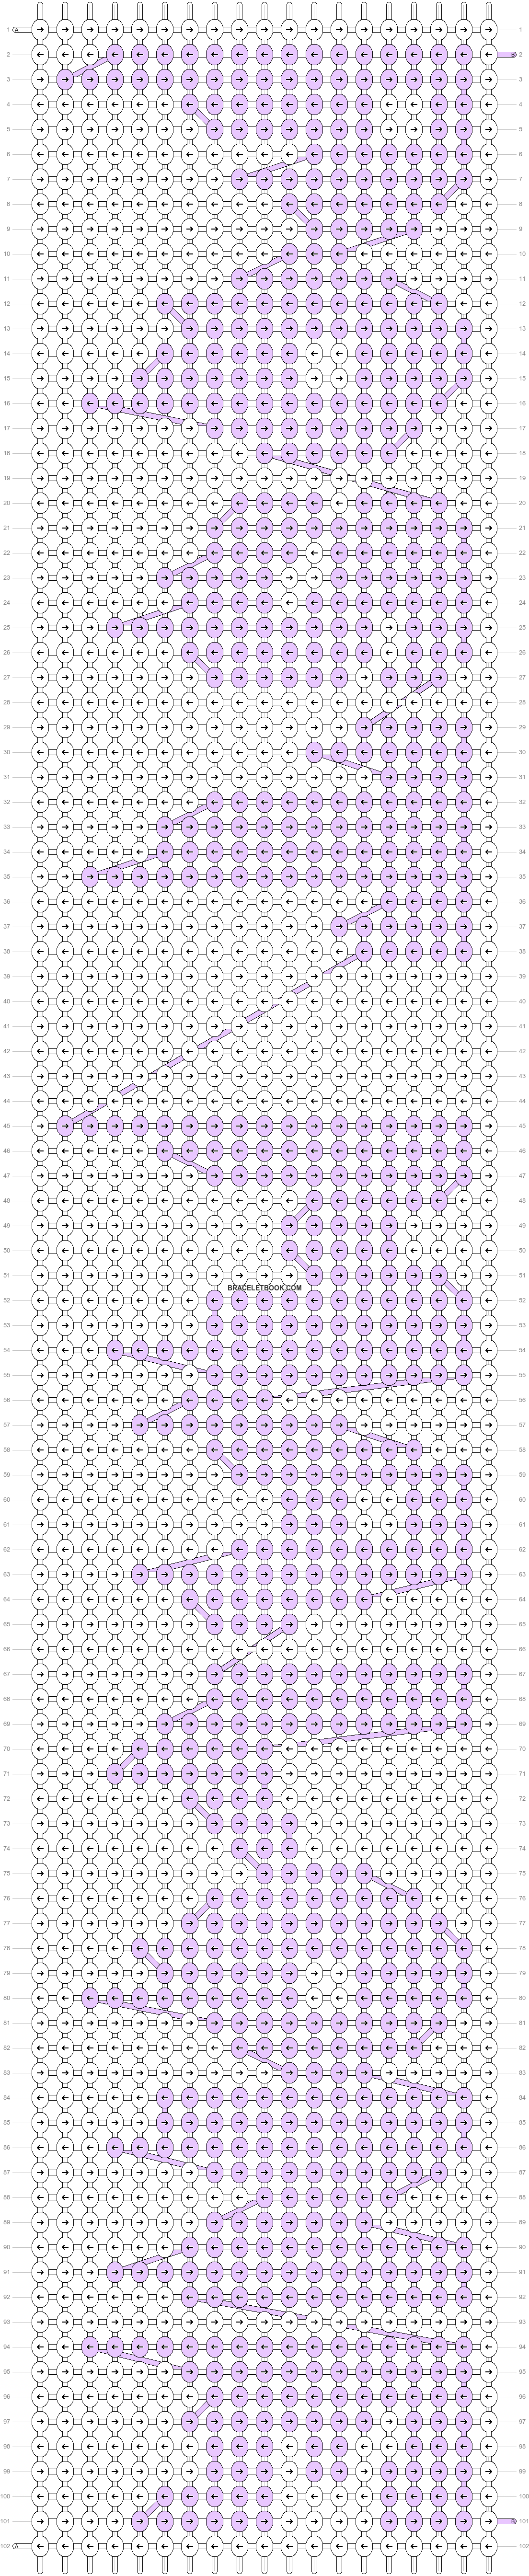 Alpha pattern #47885 variation #86870 pattern